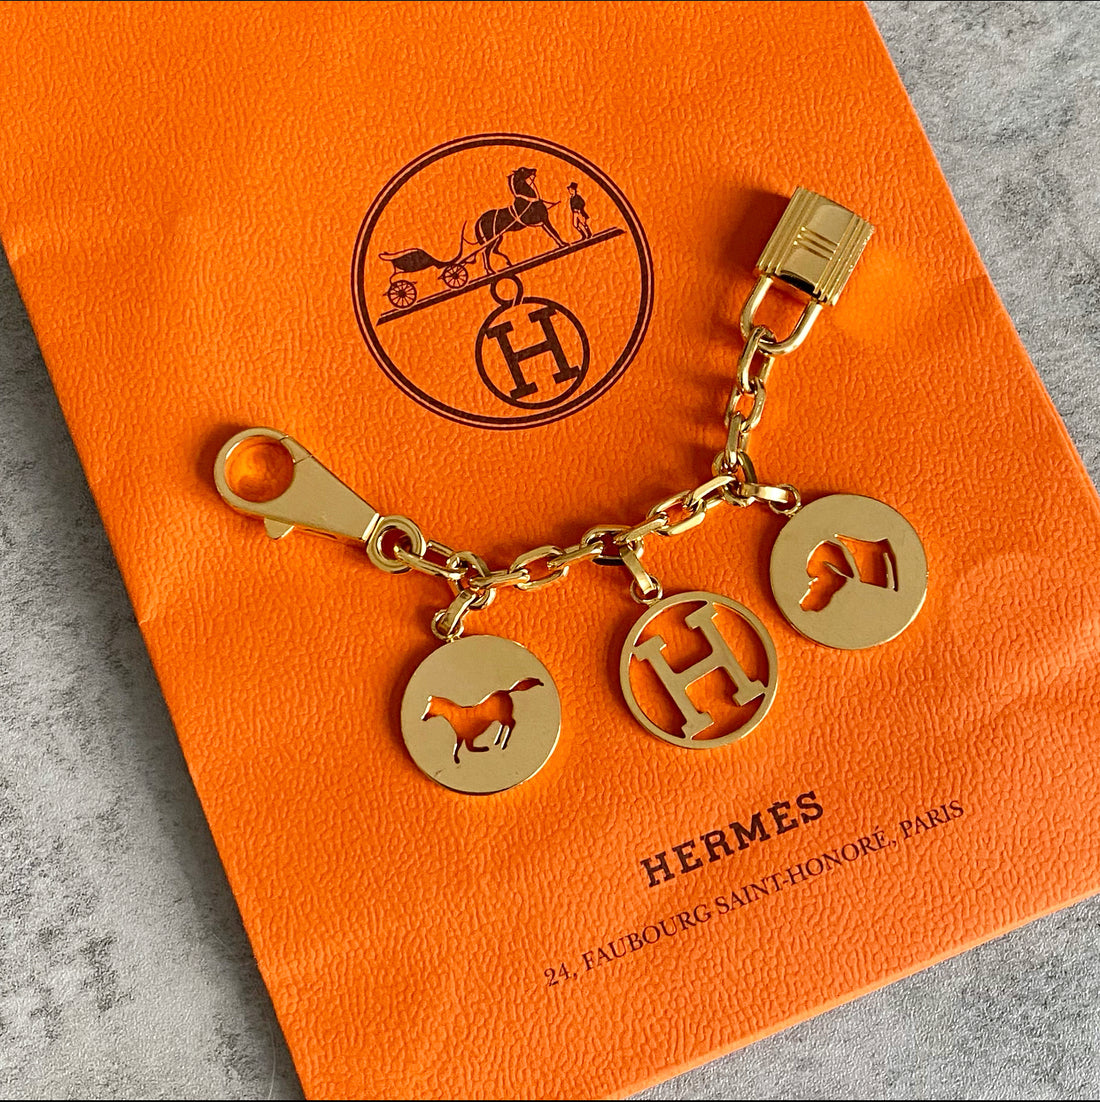 HERMES Breloque Bag Charm Gold 550771